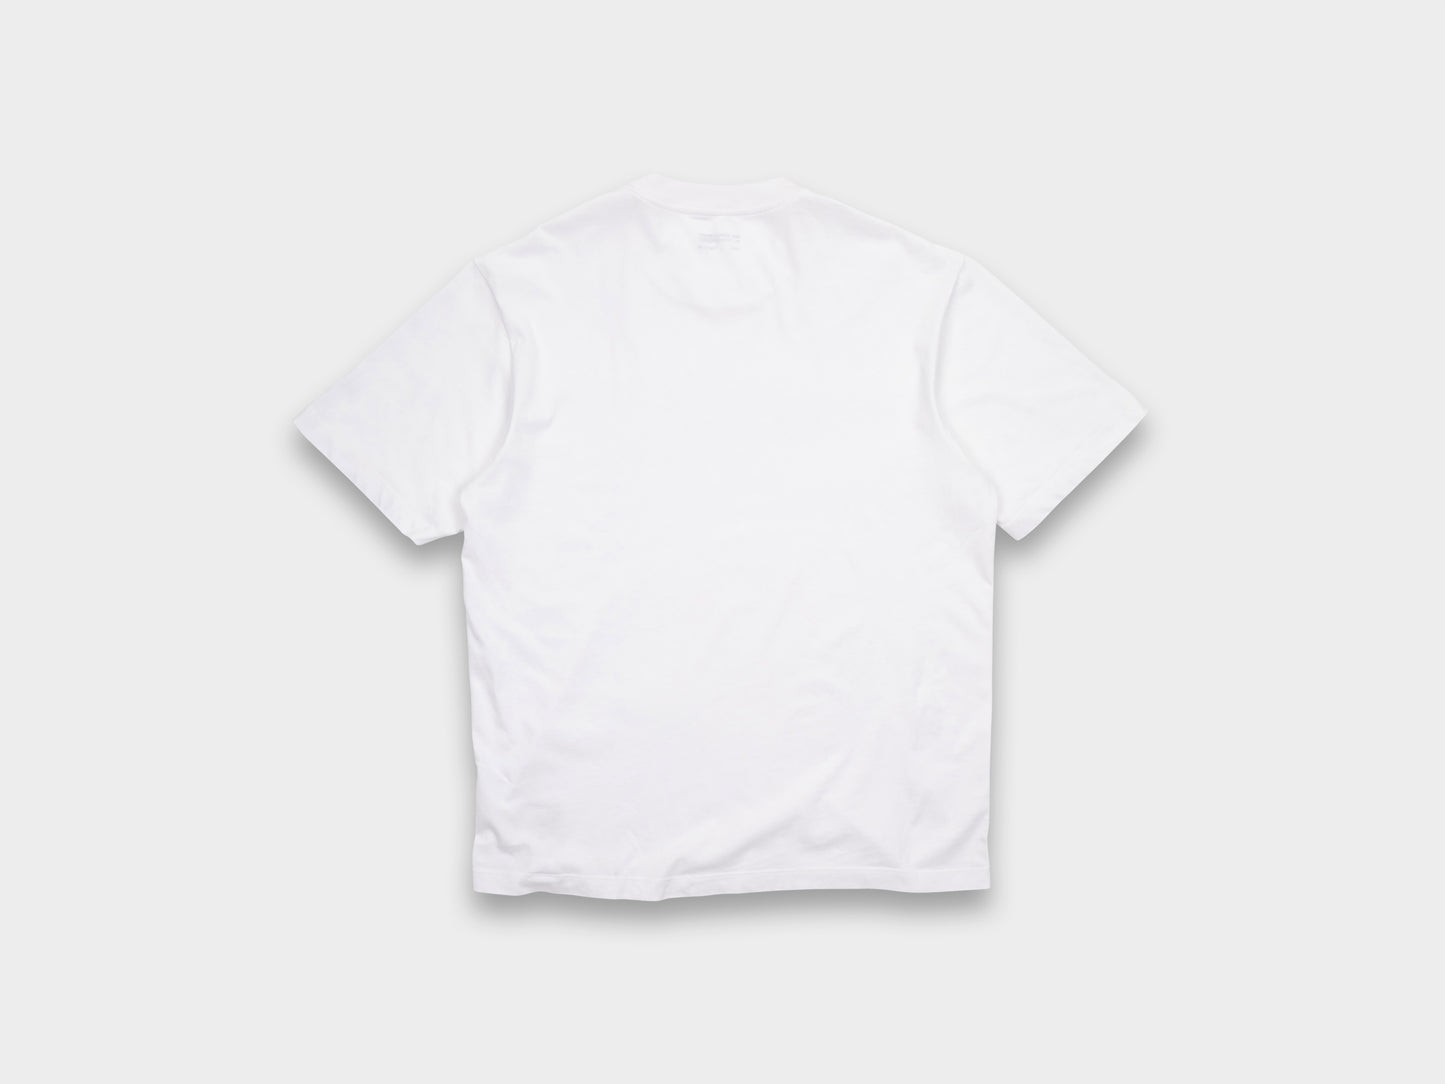 Lady White Co. Athens T-Shirt White